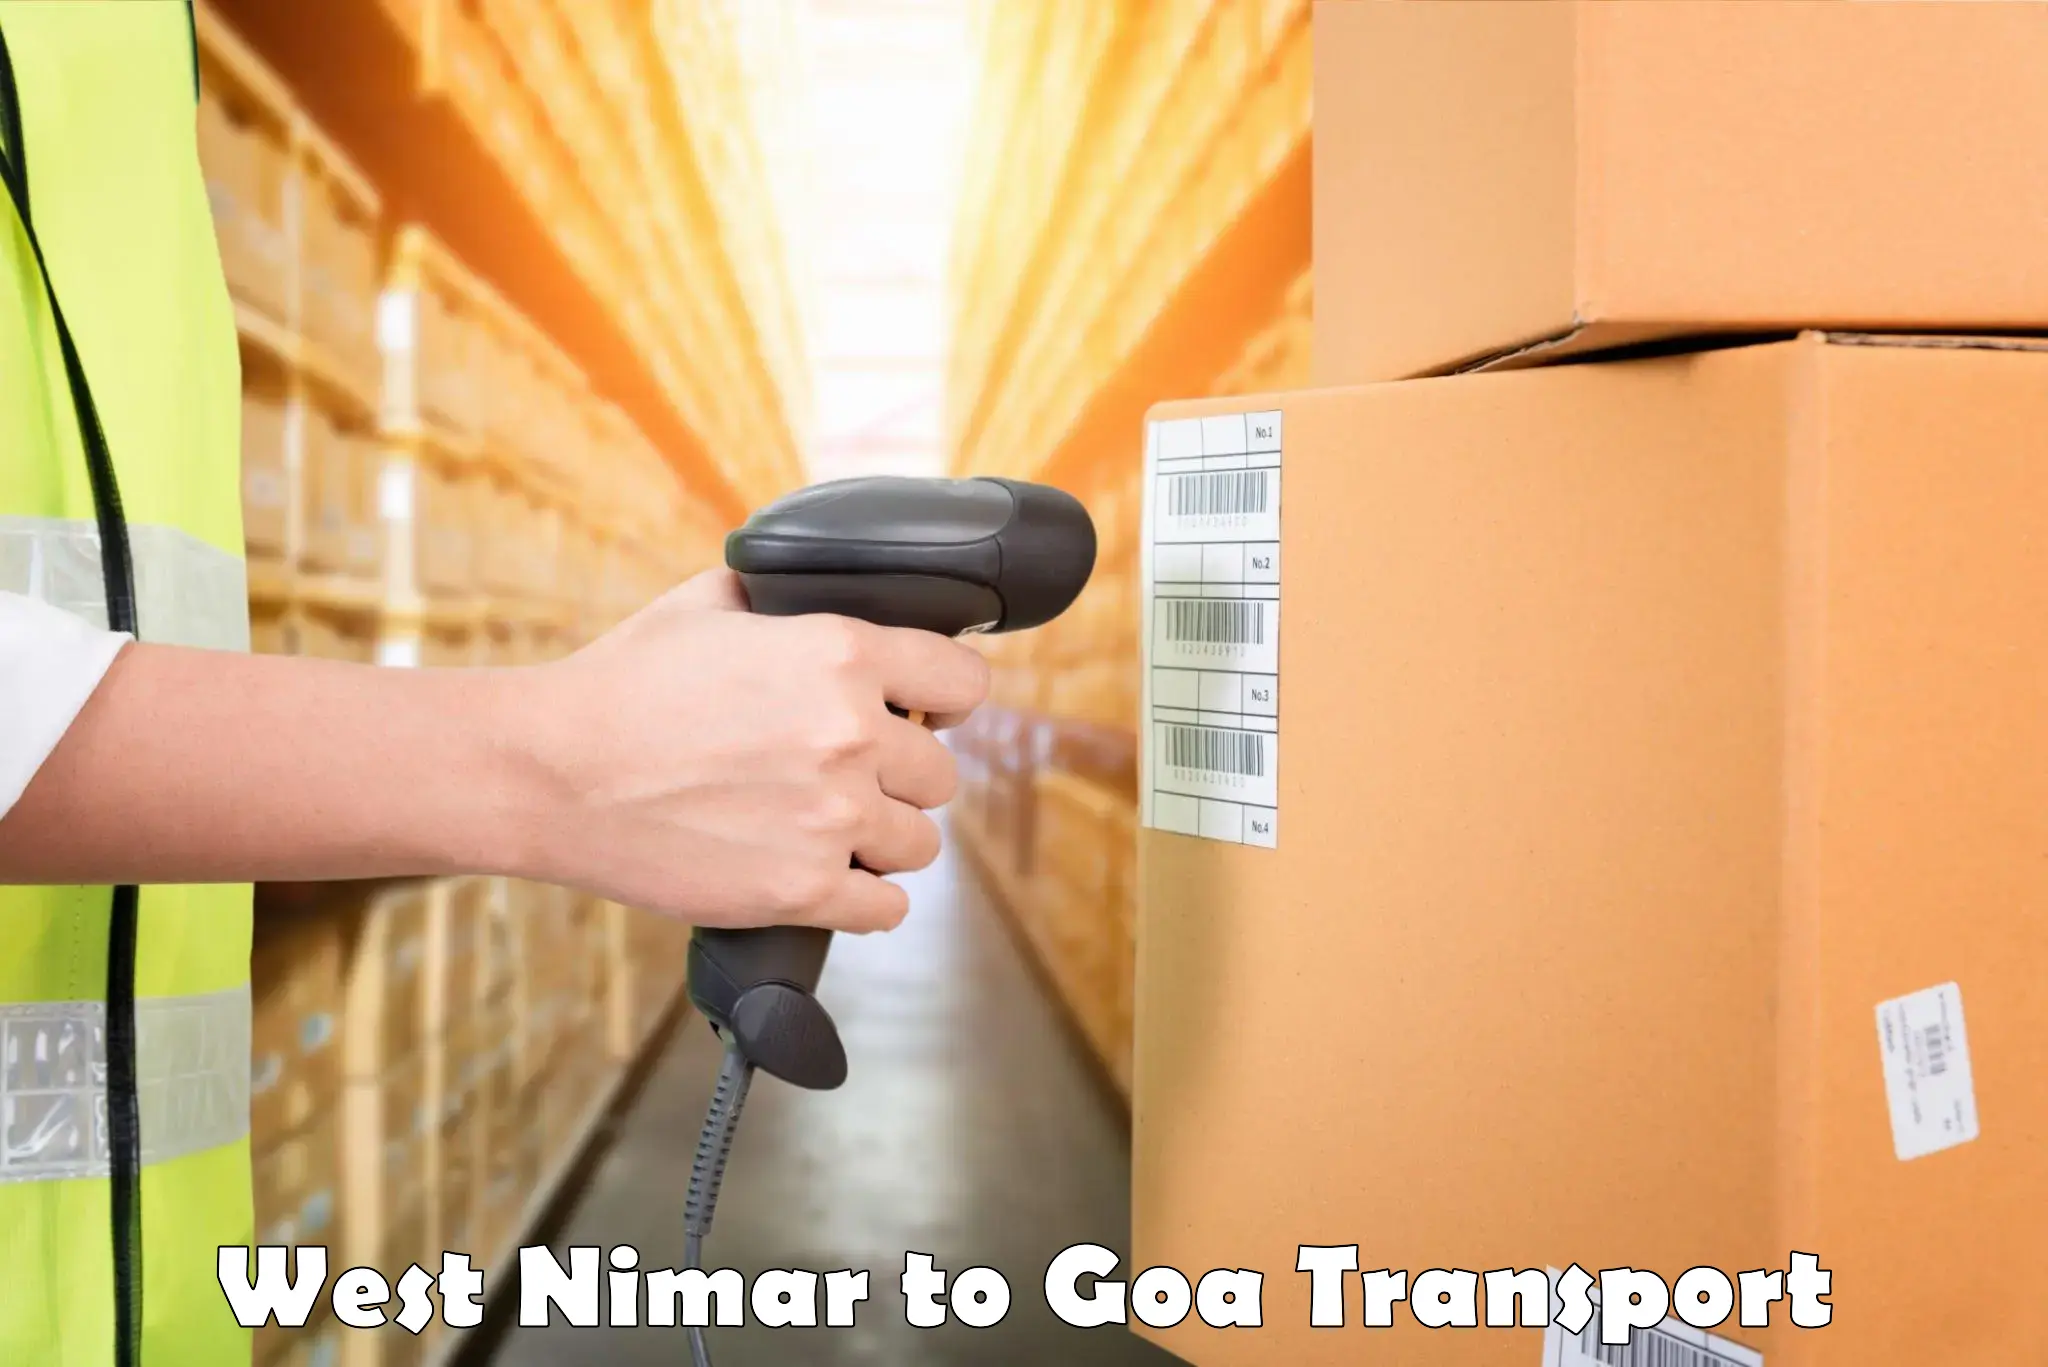 Transport in sharing West Nimar to Panaji